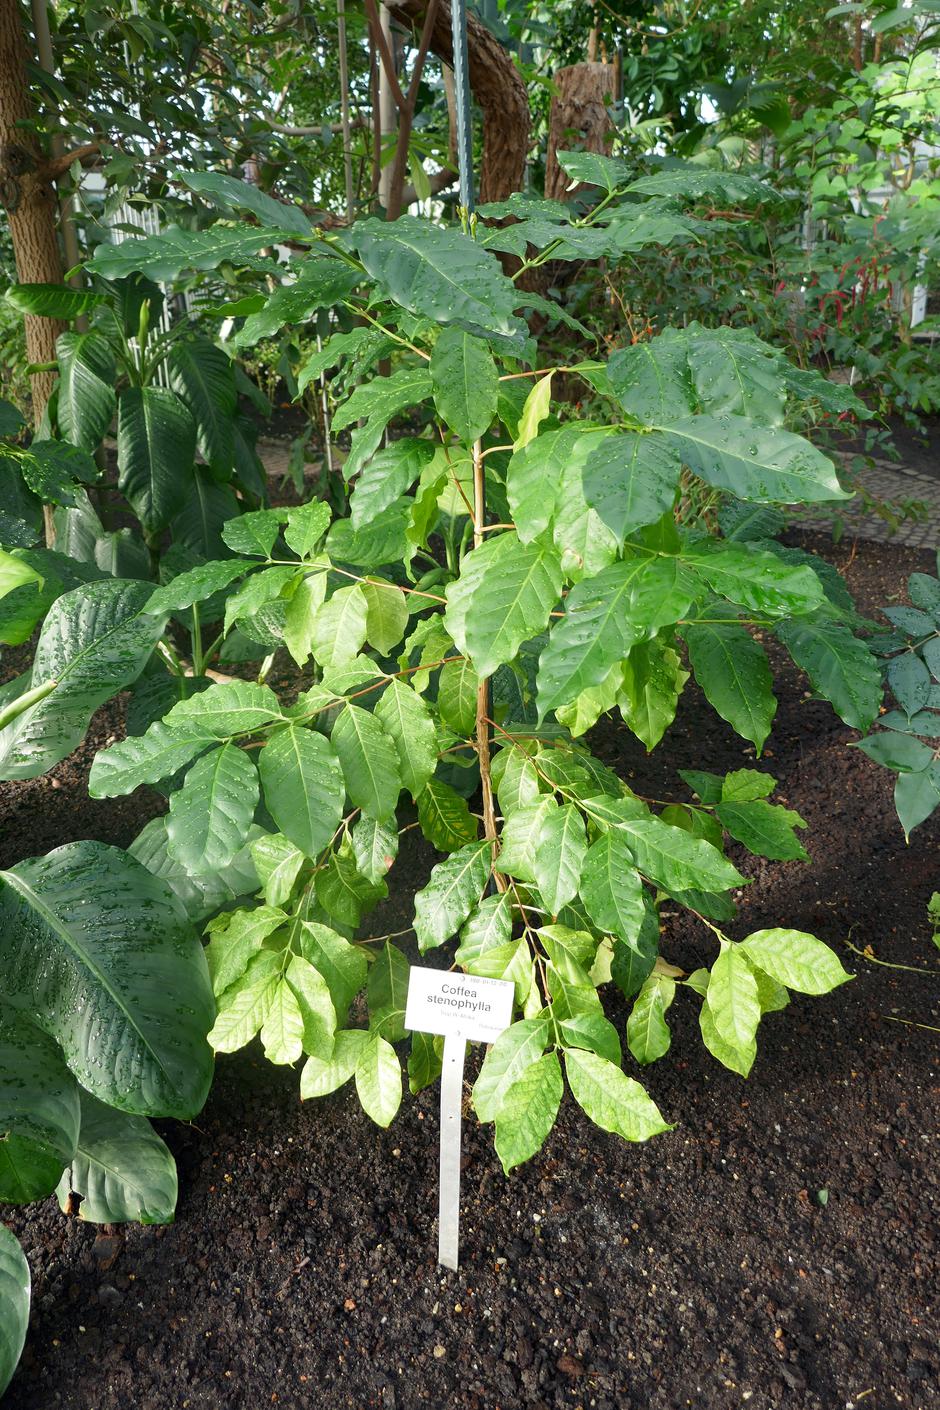 Coffea stenophylla | Author: Wikipedia